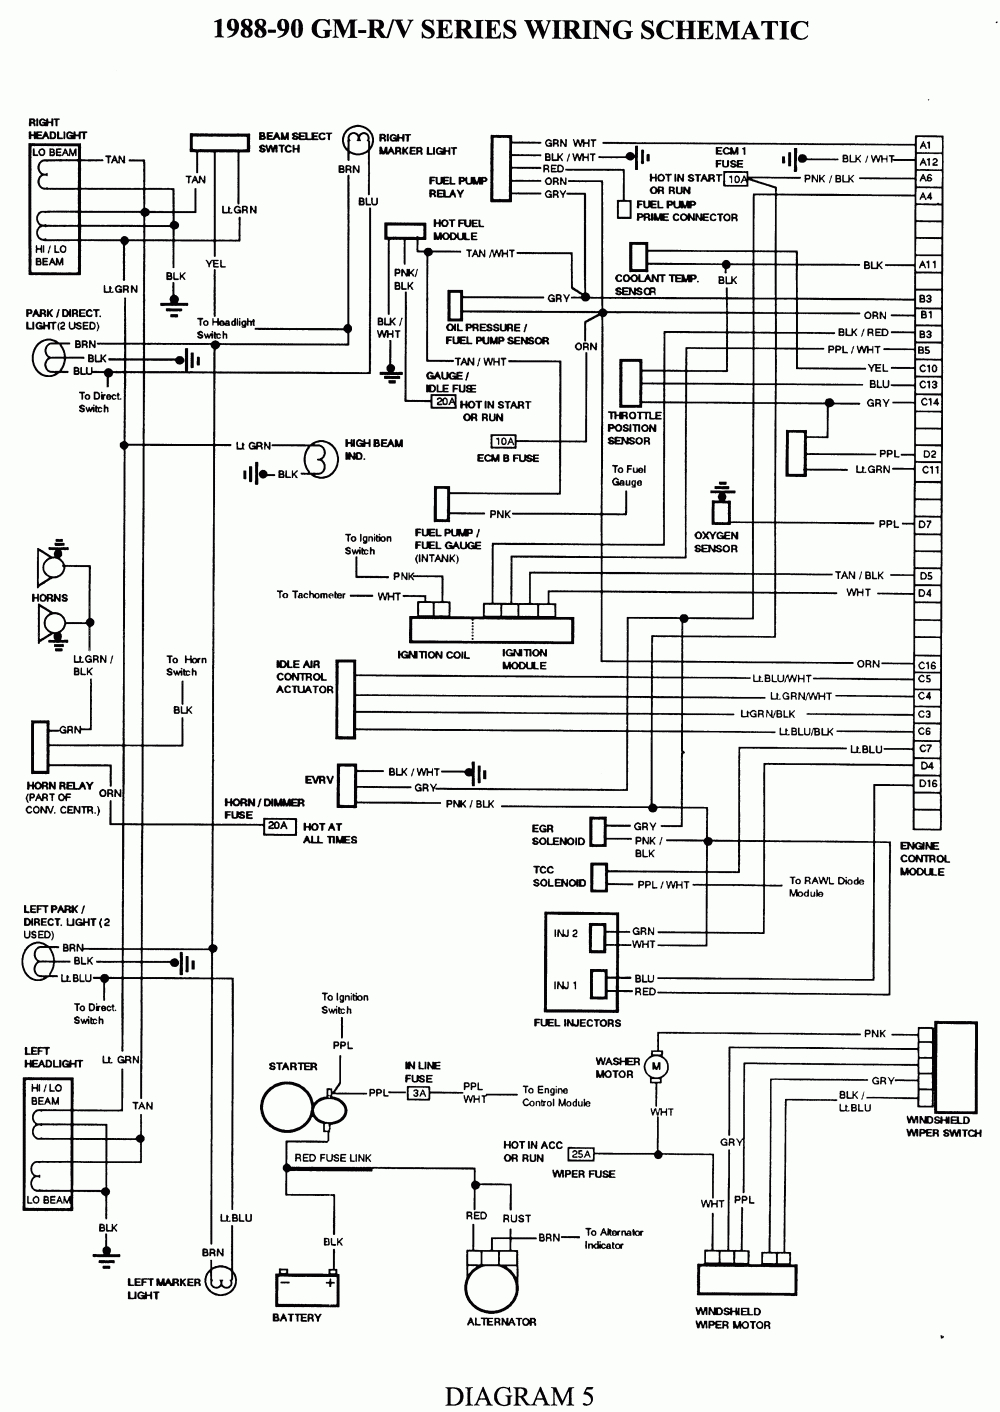 97 Chevy 1500 Fuel System Wiring Diagram | Wiring Diagram - 1989 Chevy Truck Fuel Pump Wiring Diagram